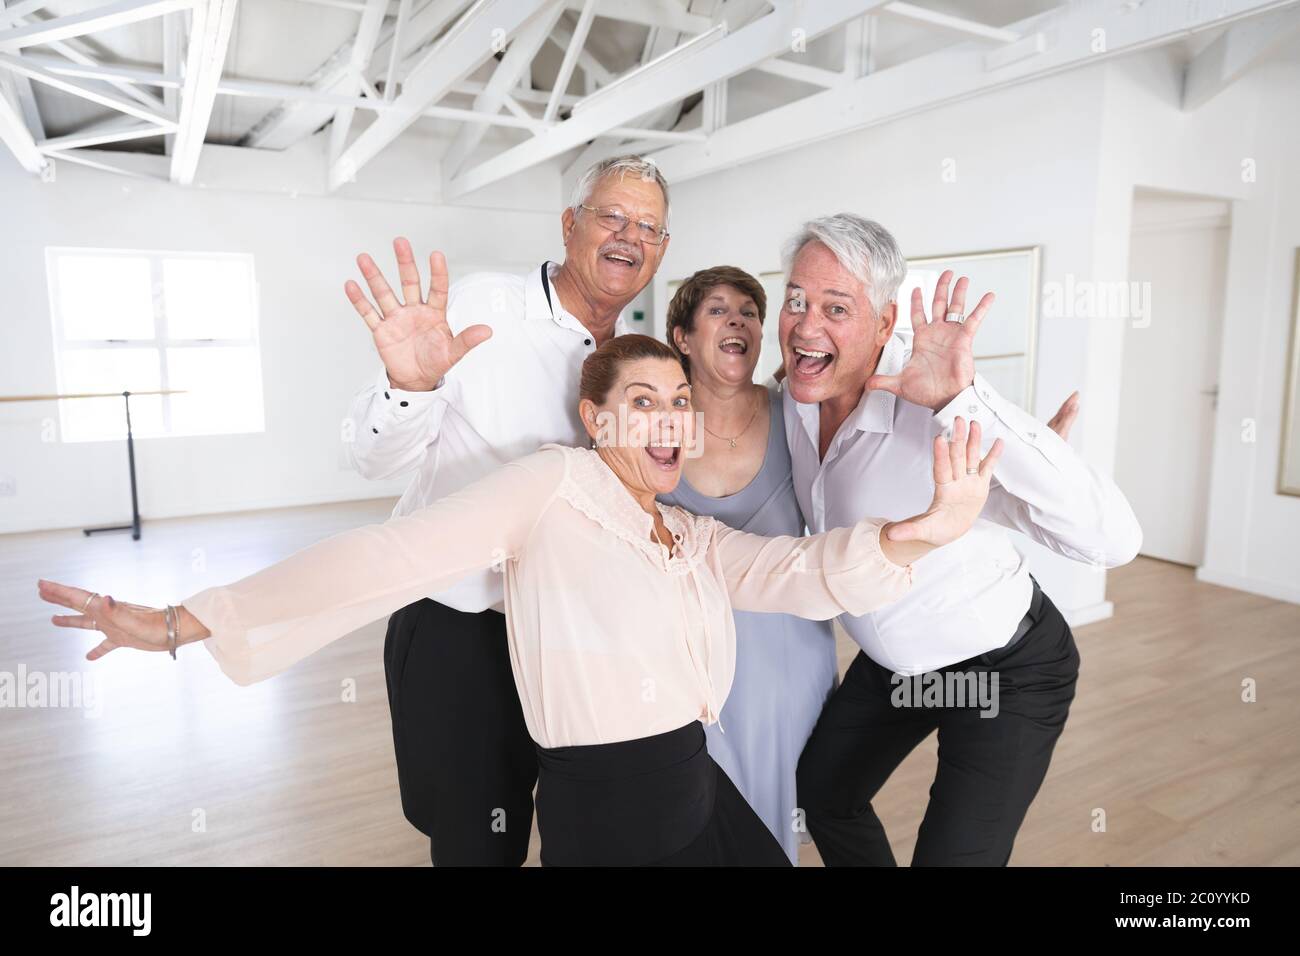 Portrait of happy Caucasian senior couples during ballroom dancing Stock Photo